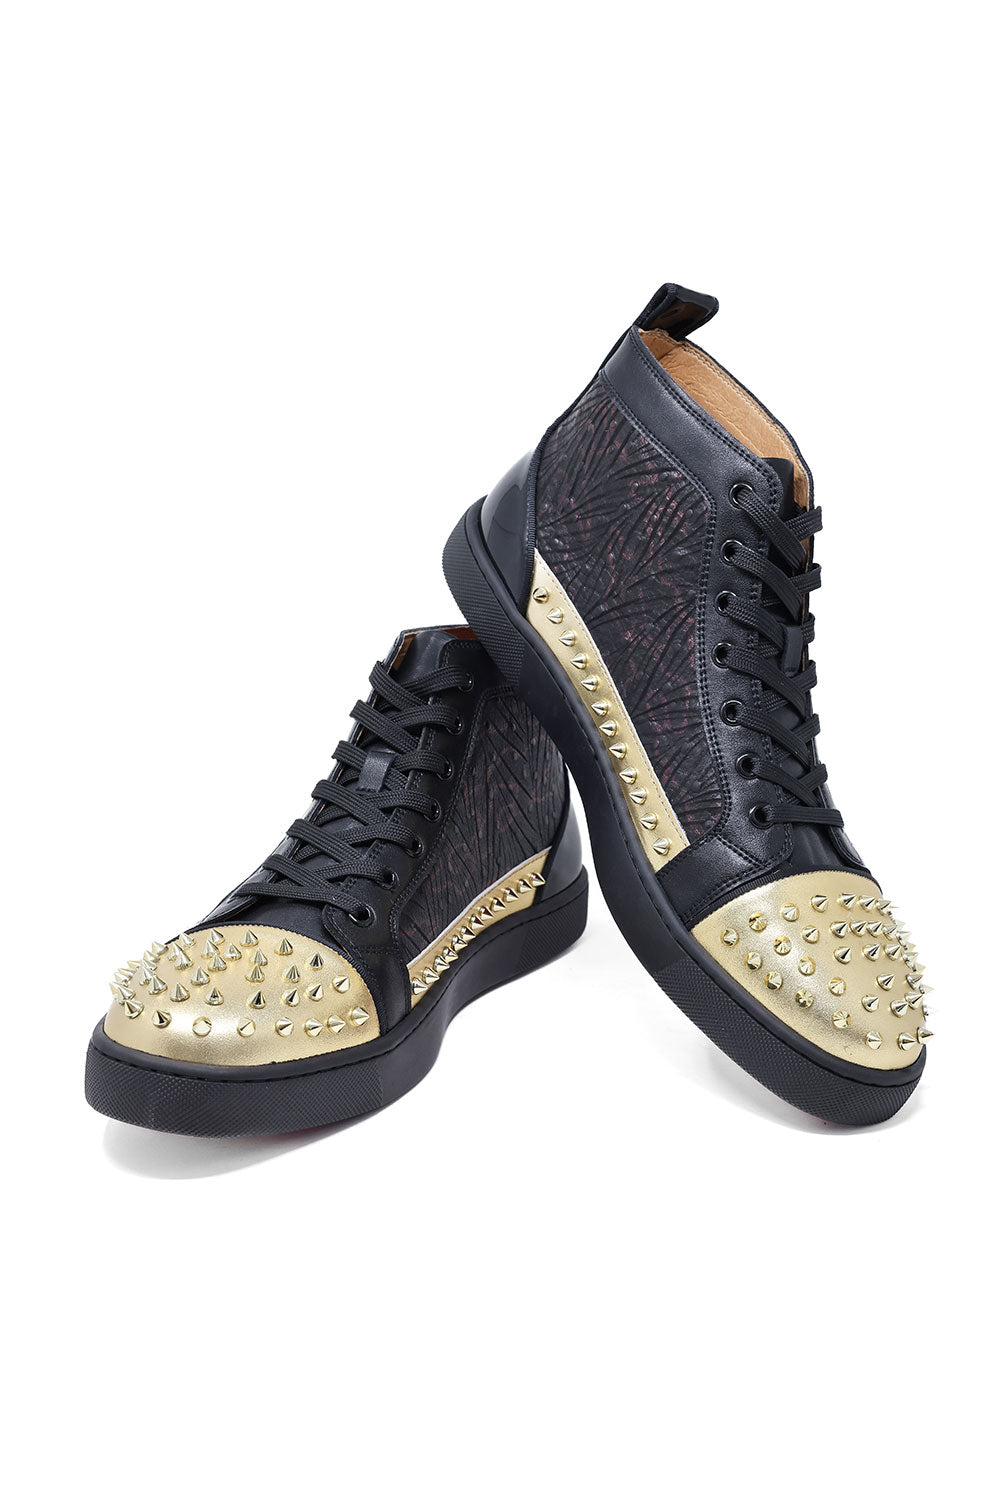 Barabas Men's Spikes Pattern black gold High-Top Luxury Sneakers SH736